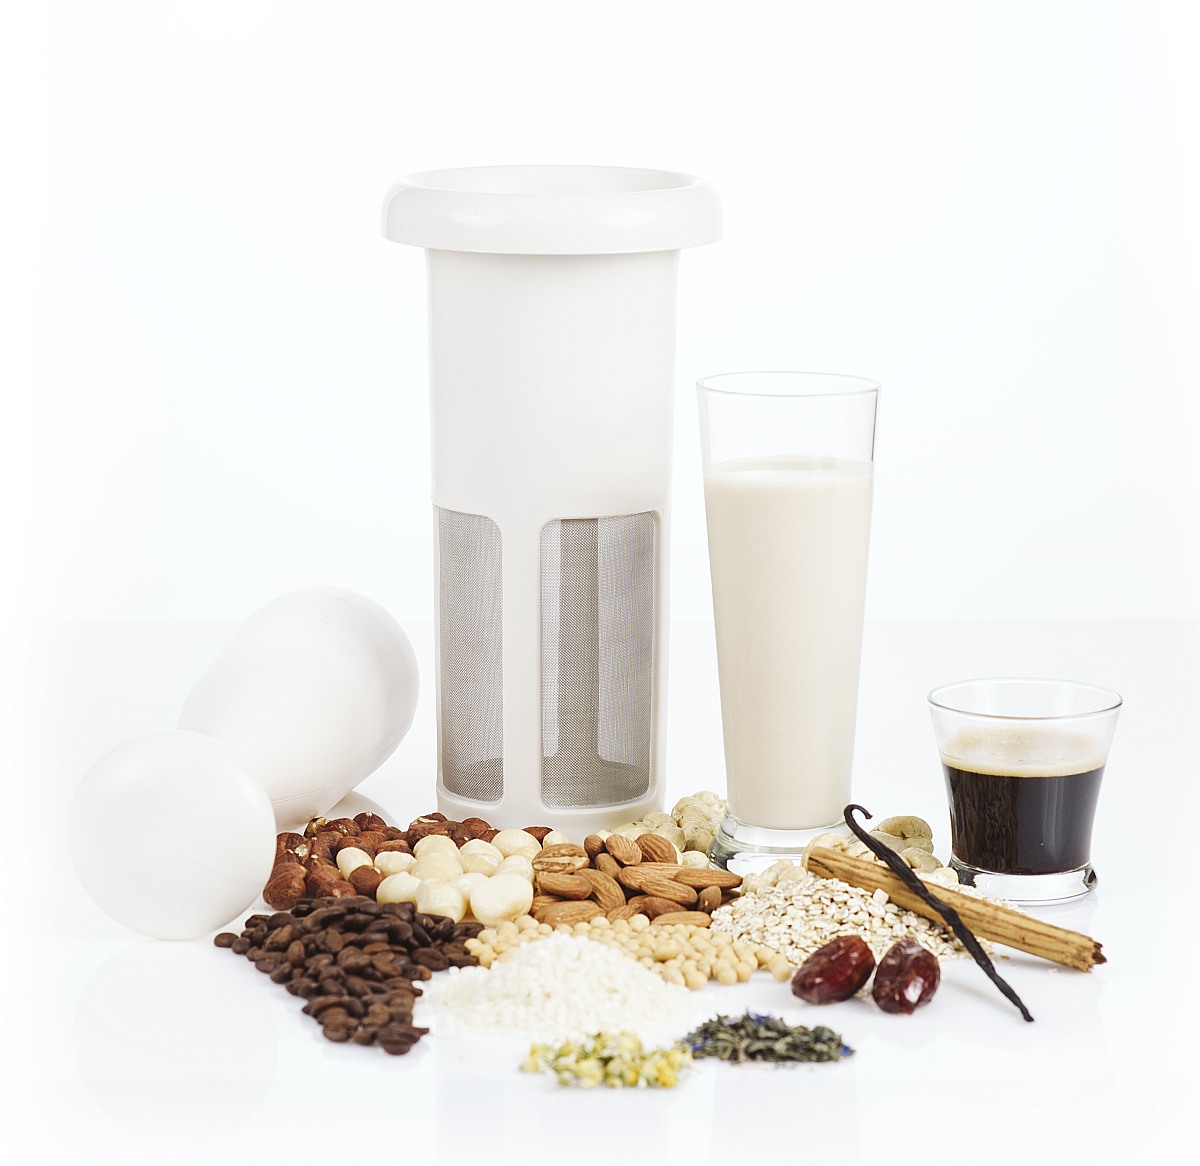 Making vegan plant-based milk is easy with the Vegan Milker Core